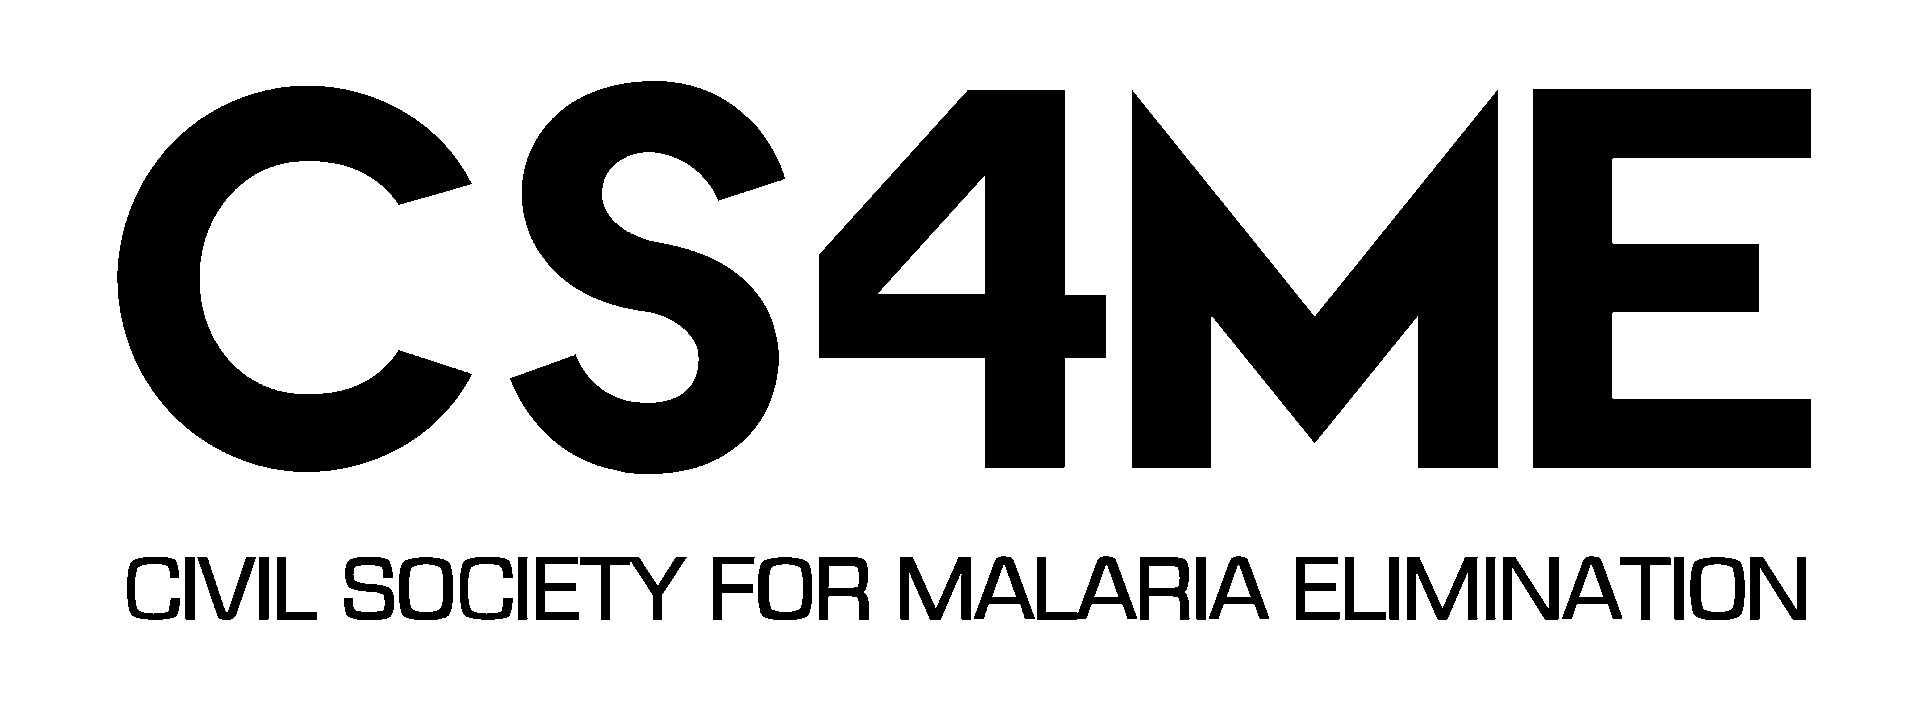 CS4ME-logo